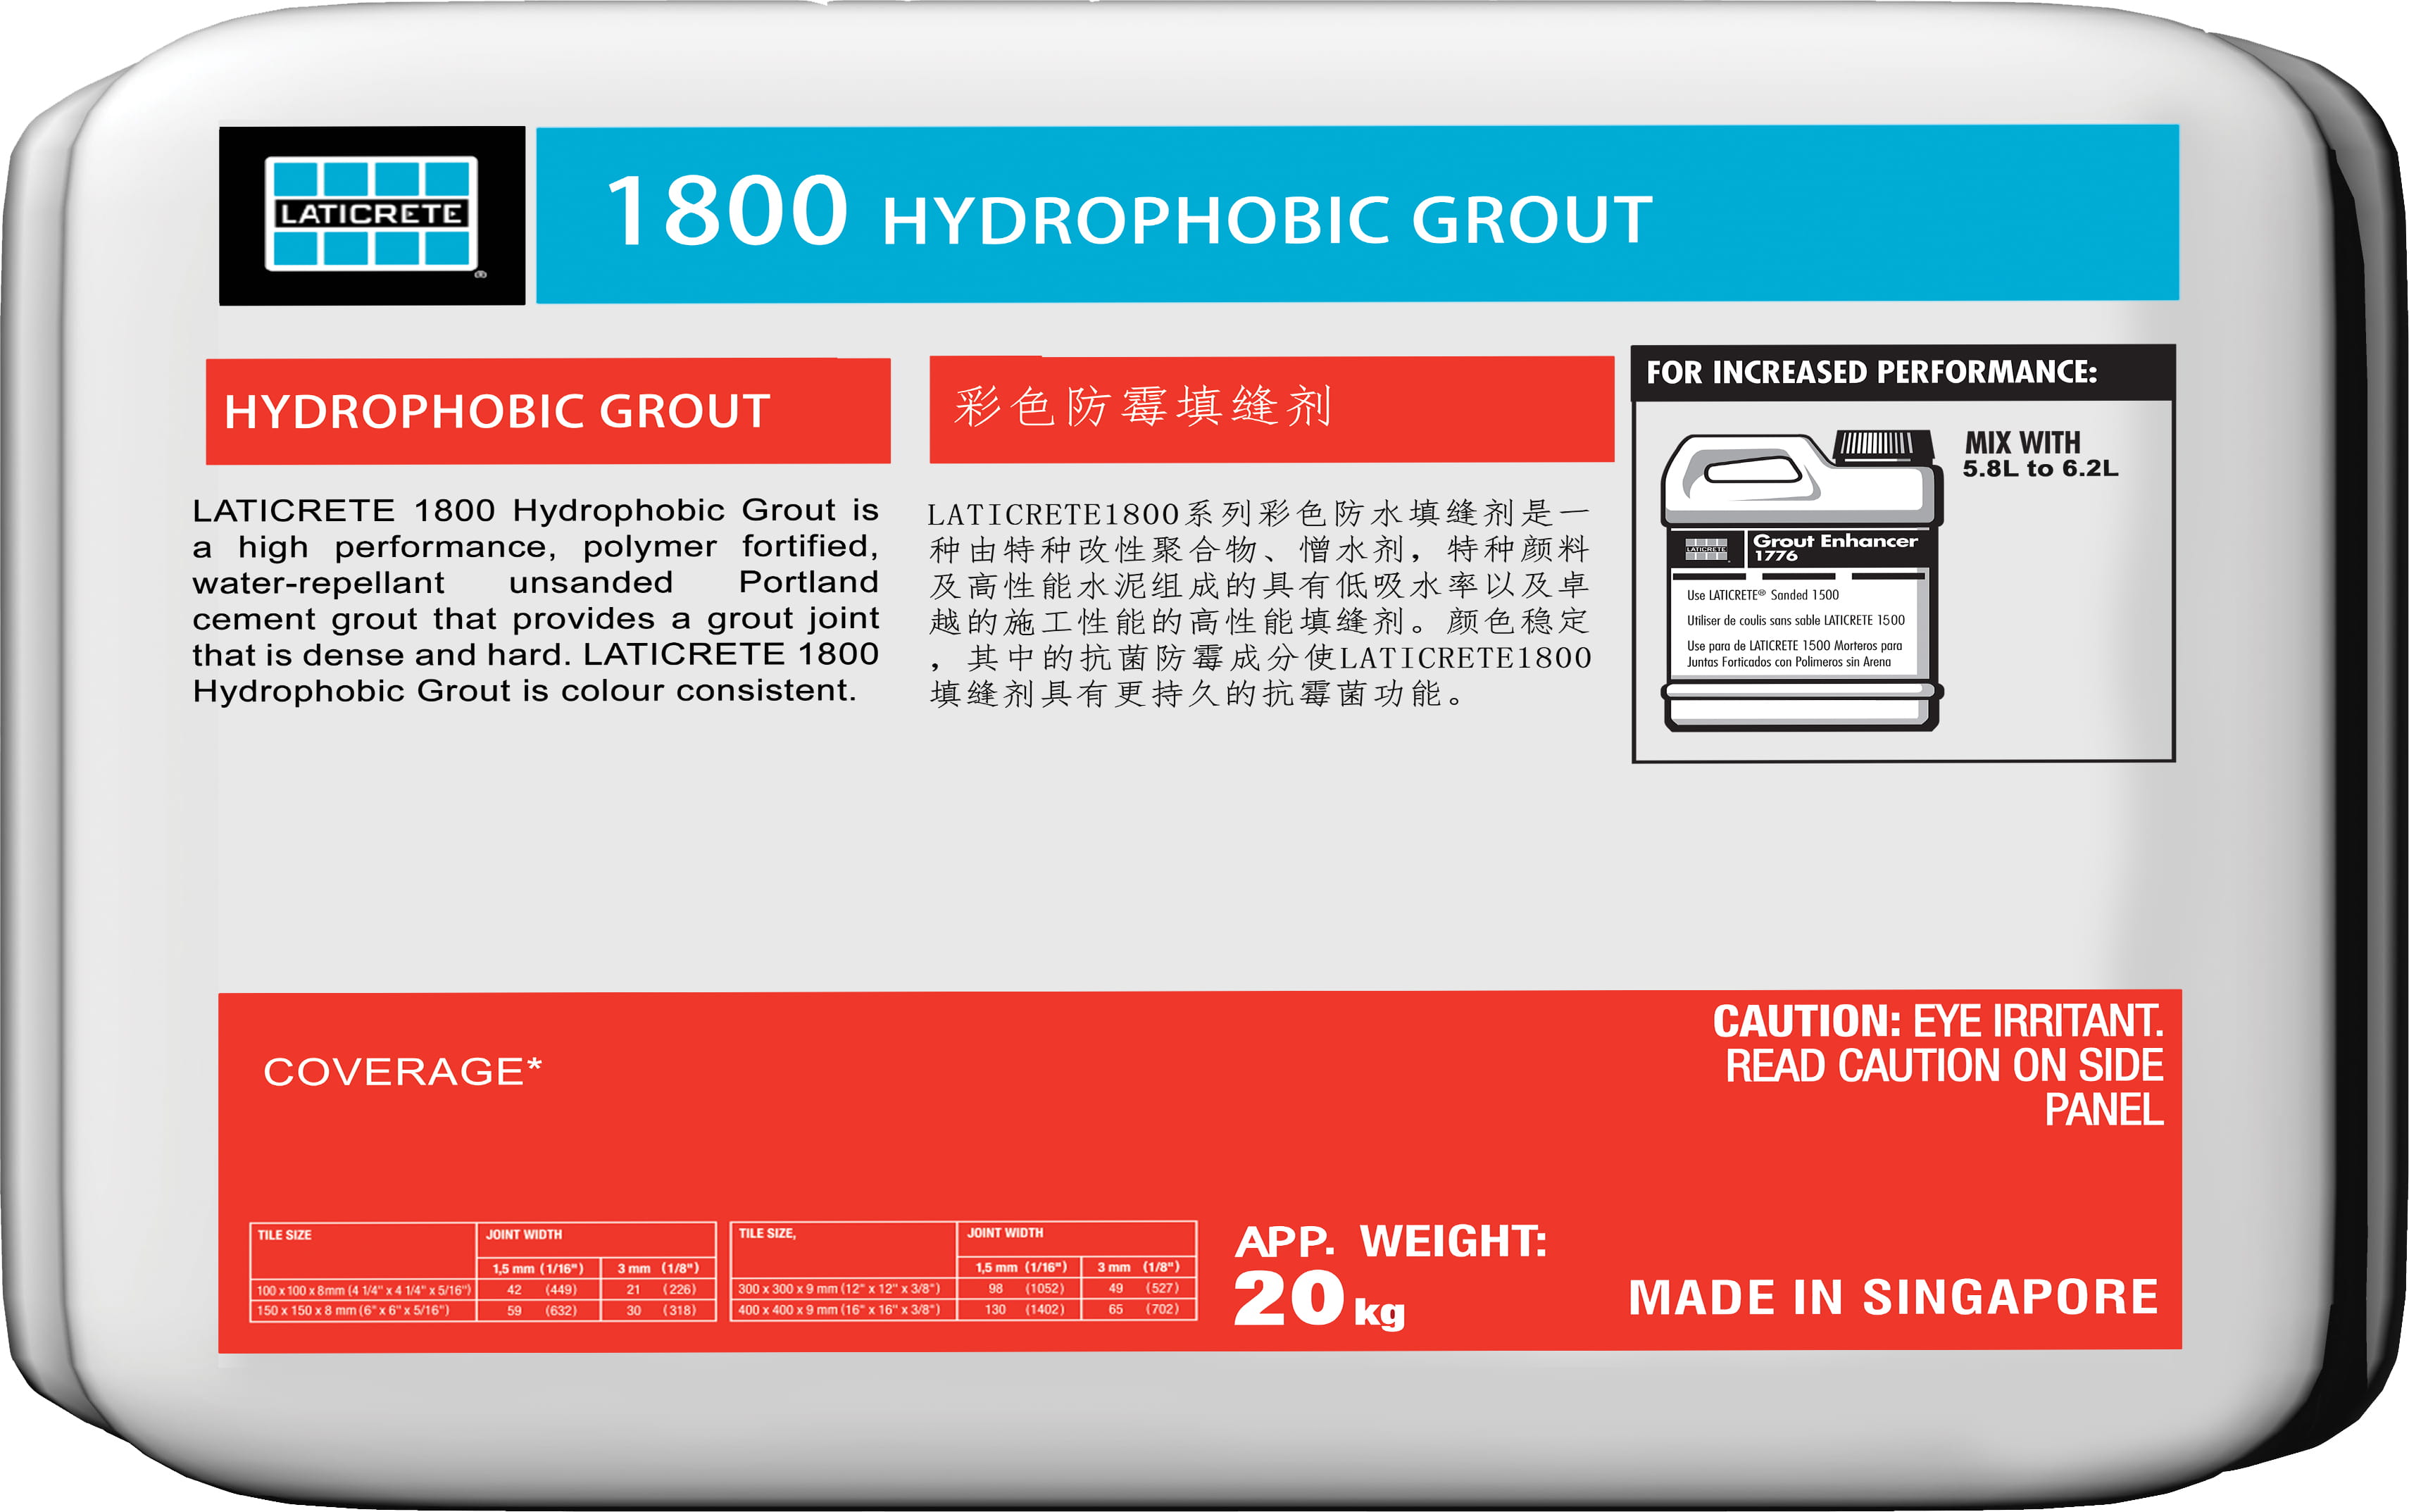 1800 Hydrophobic Grout